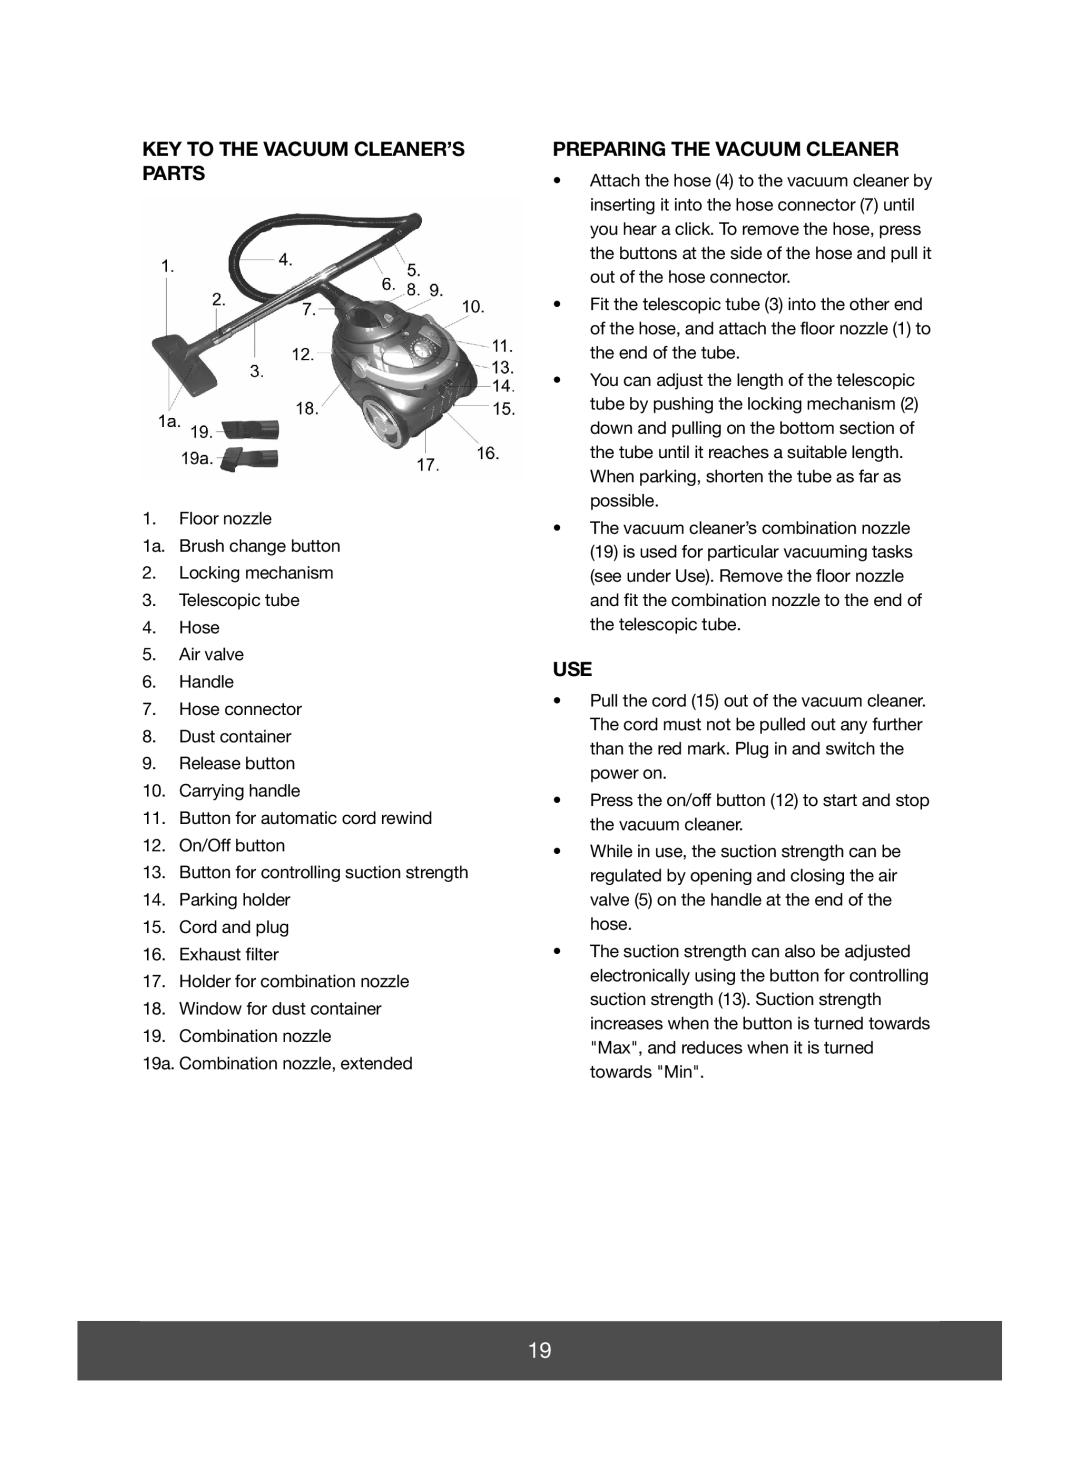 Melissa 640-139 manual Key To The Vacuum Cleaner’S Parts, Preparing The Vacuum Cleaner 